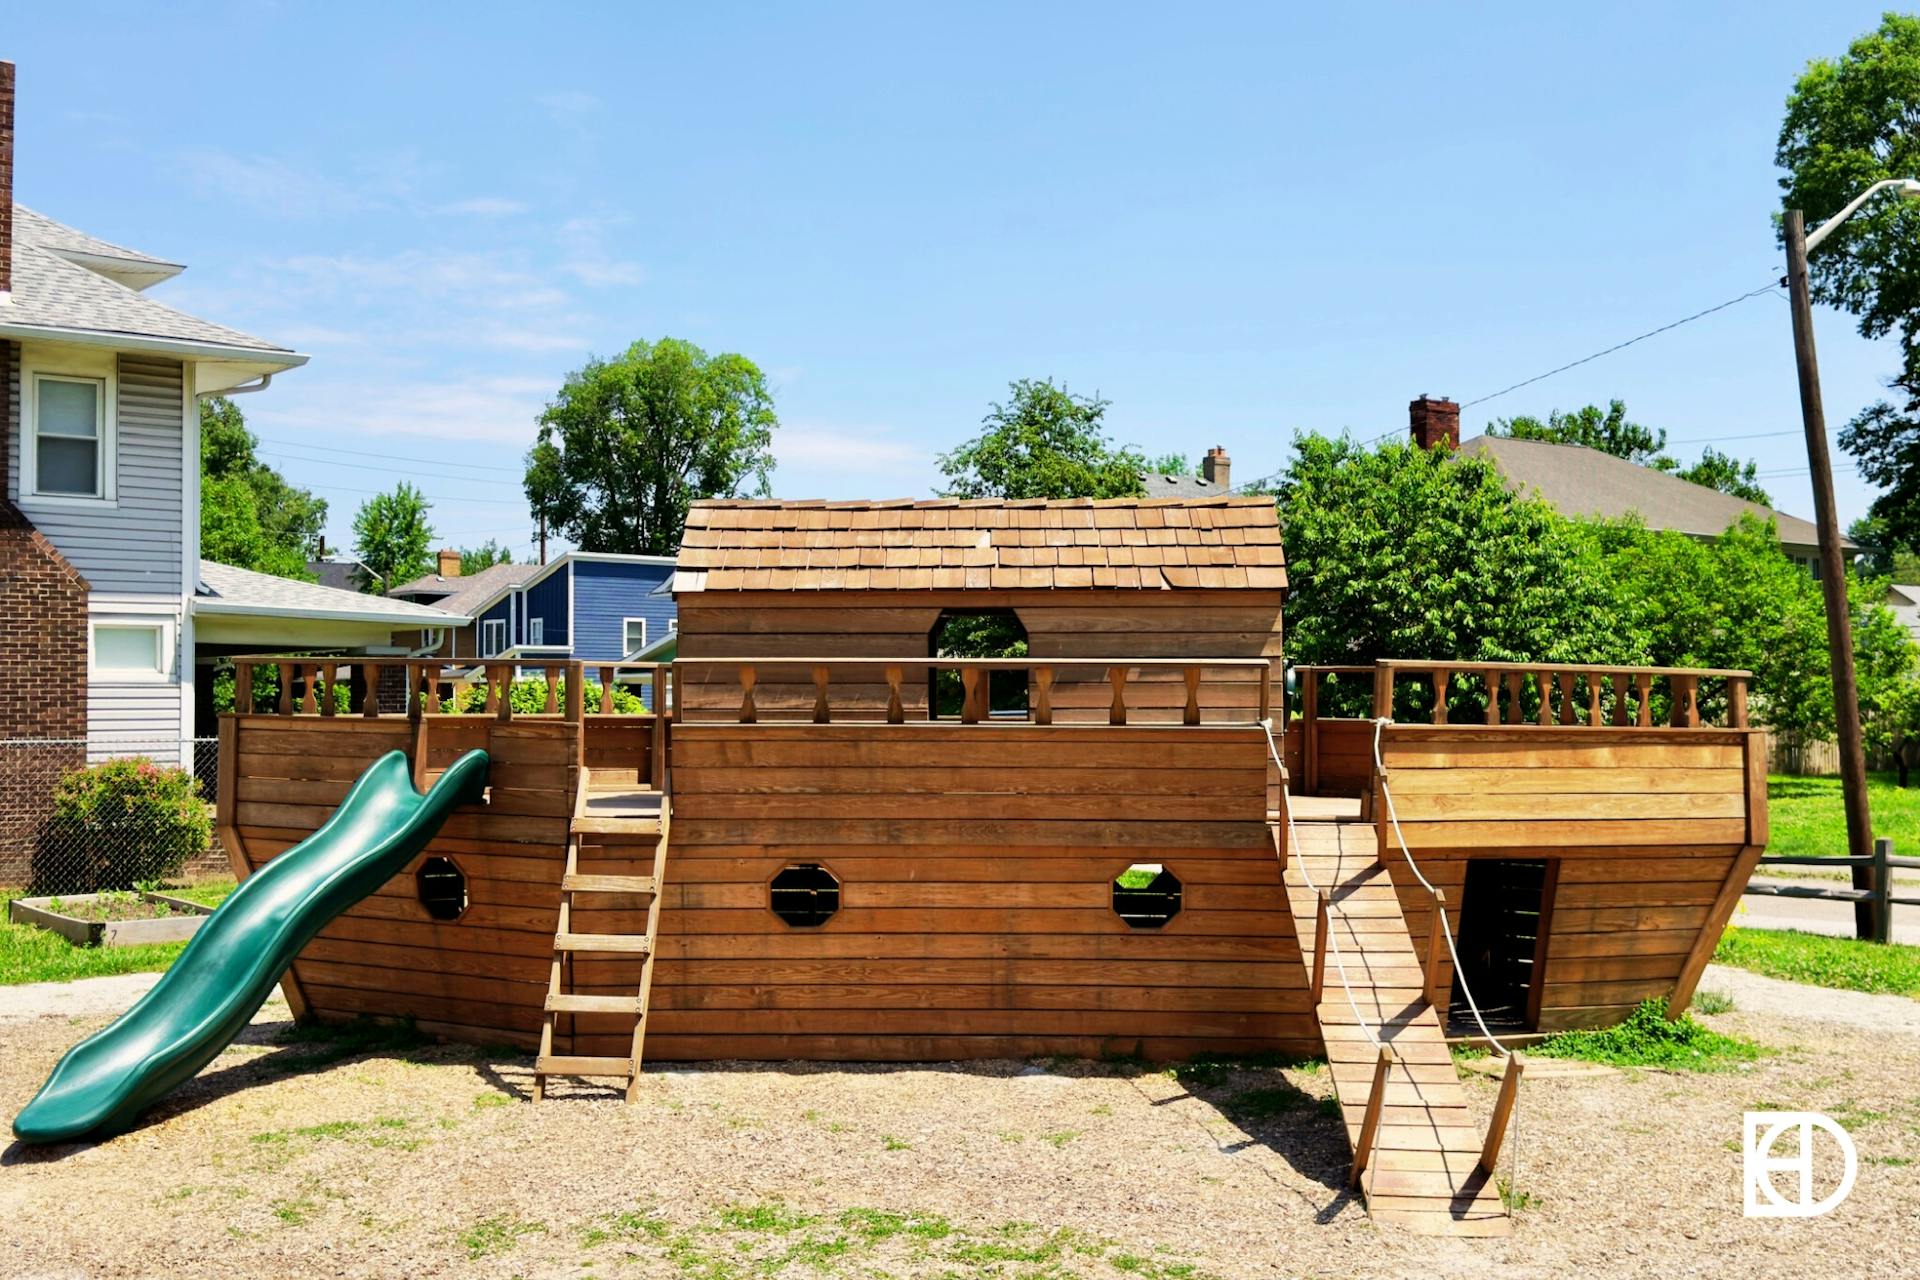 Photo of boat-shaped playground equipment at Mapleton Park